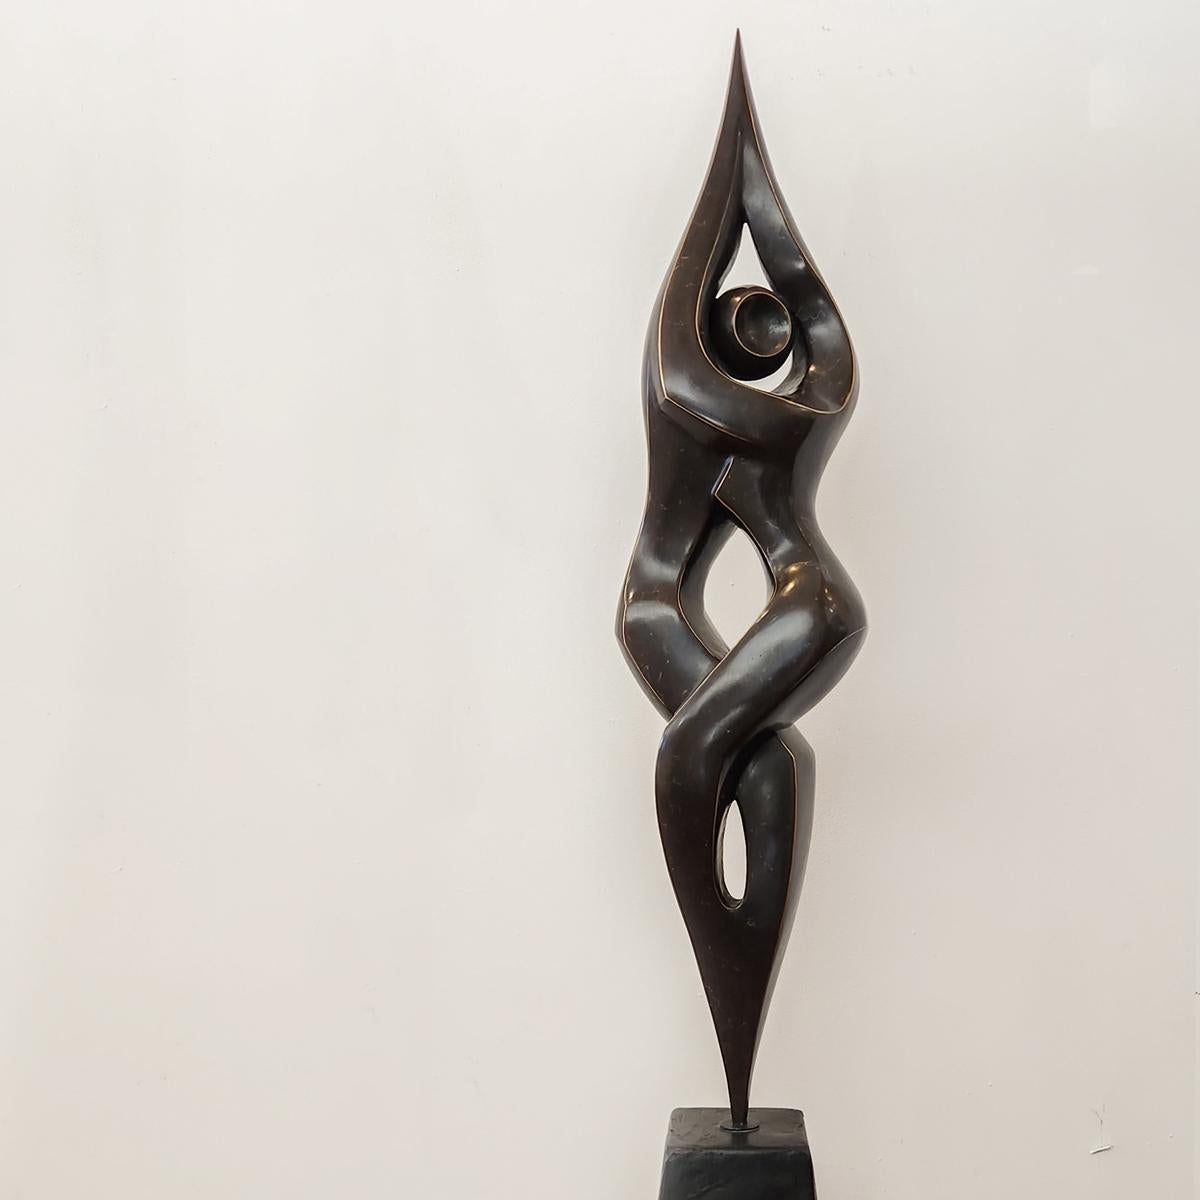 Michael Vaynman Figurative Sculpture - Entwined, Contemporary Bronze Sculpture, edition 1 of 10